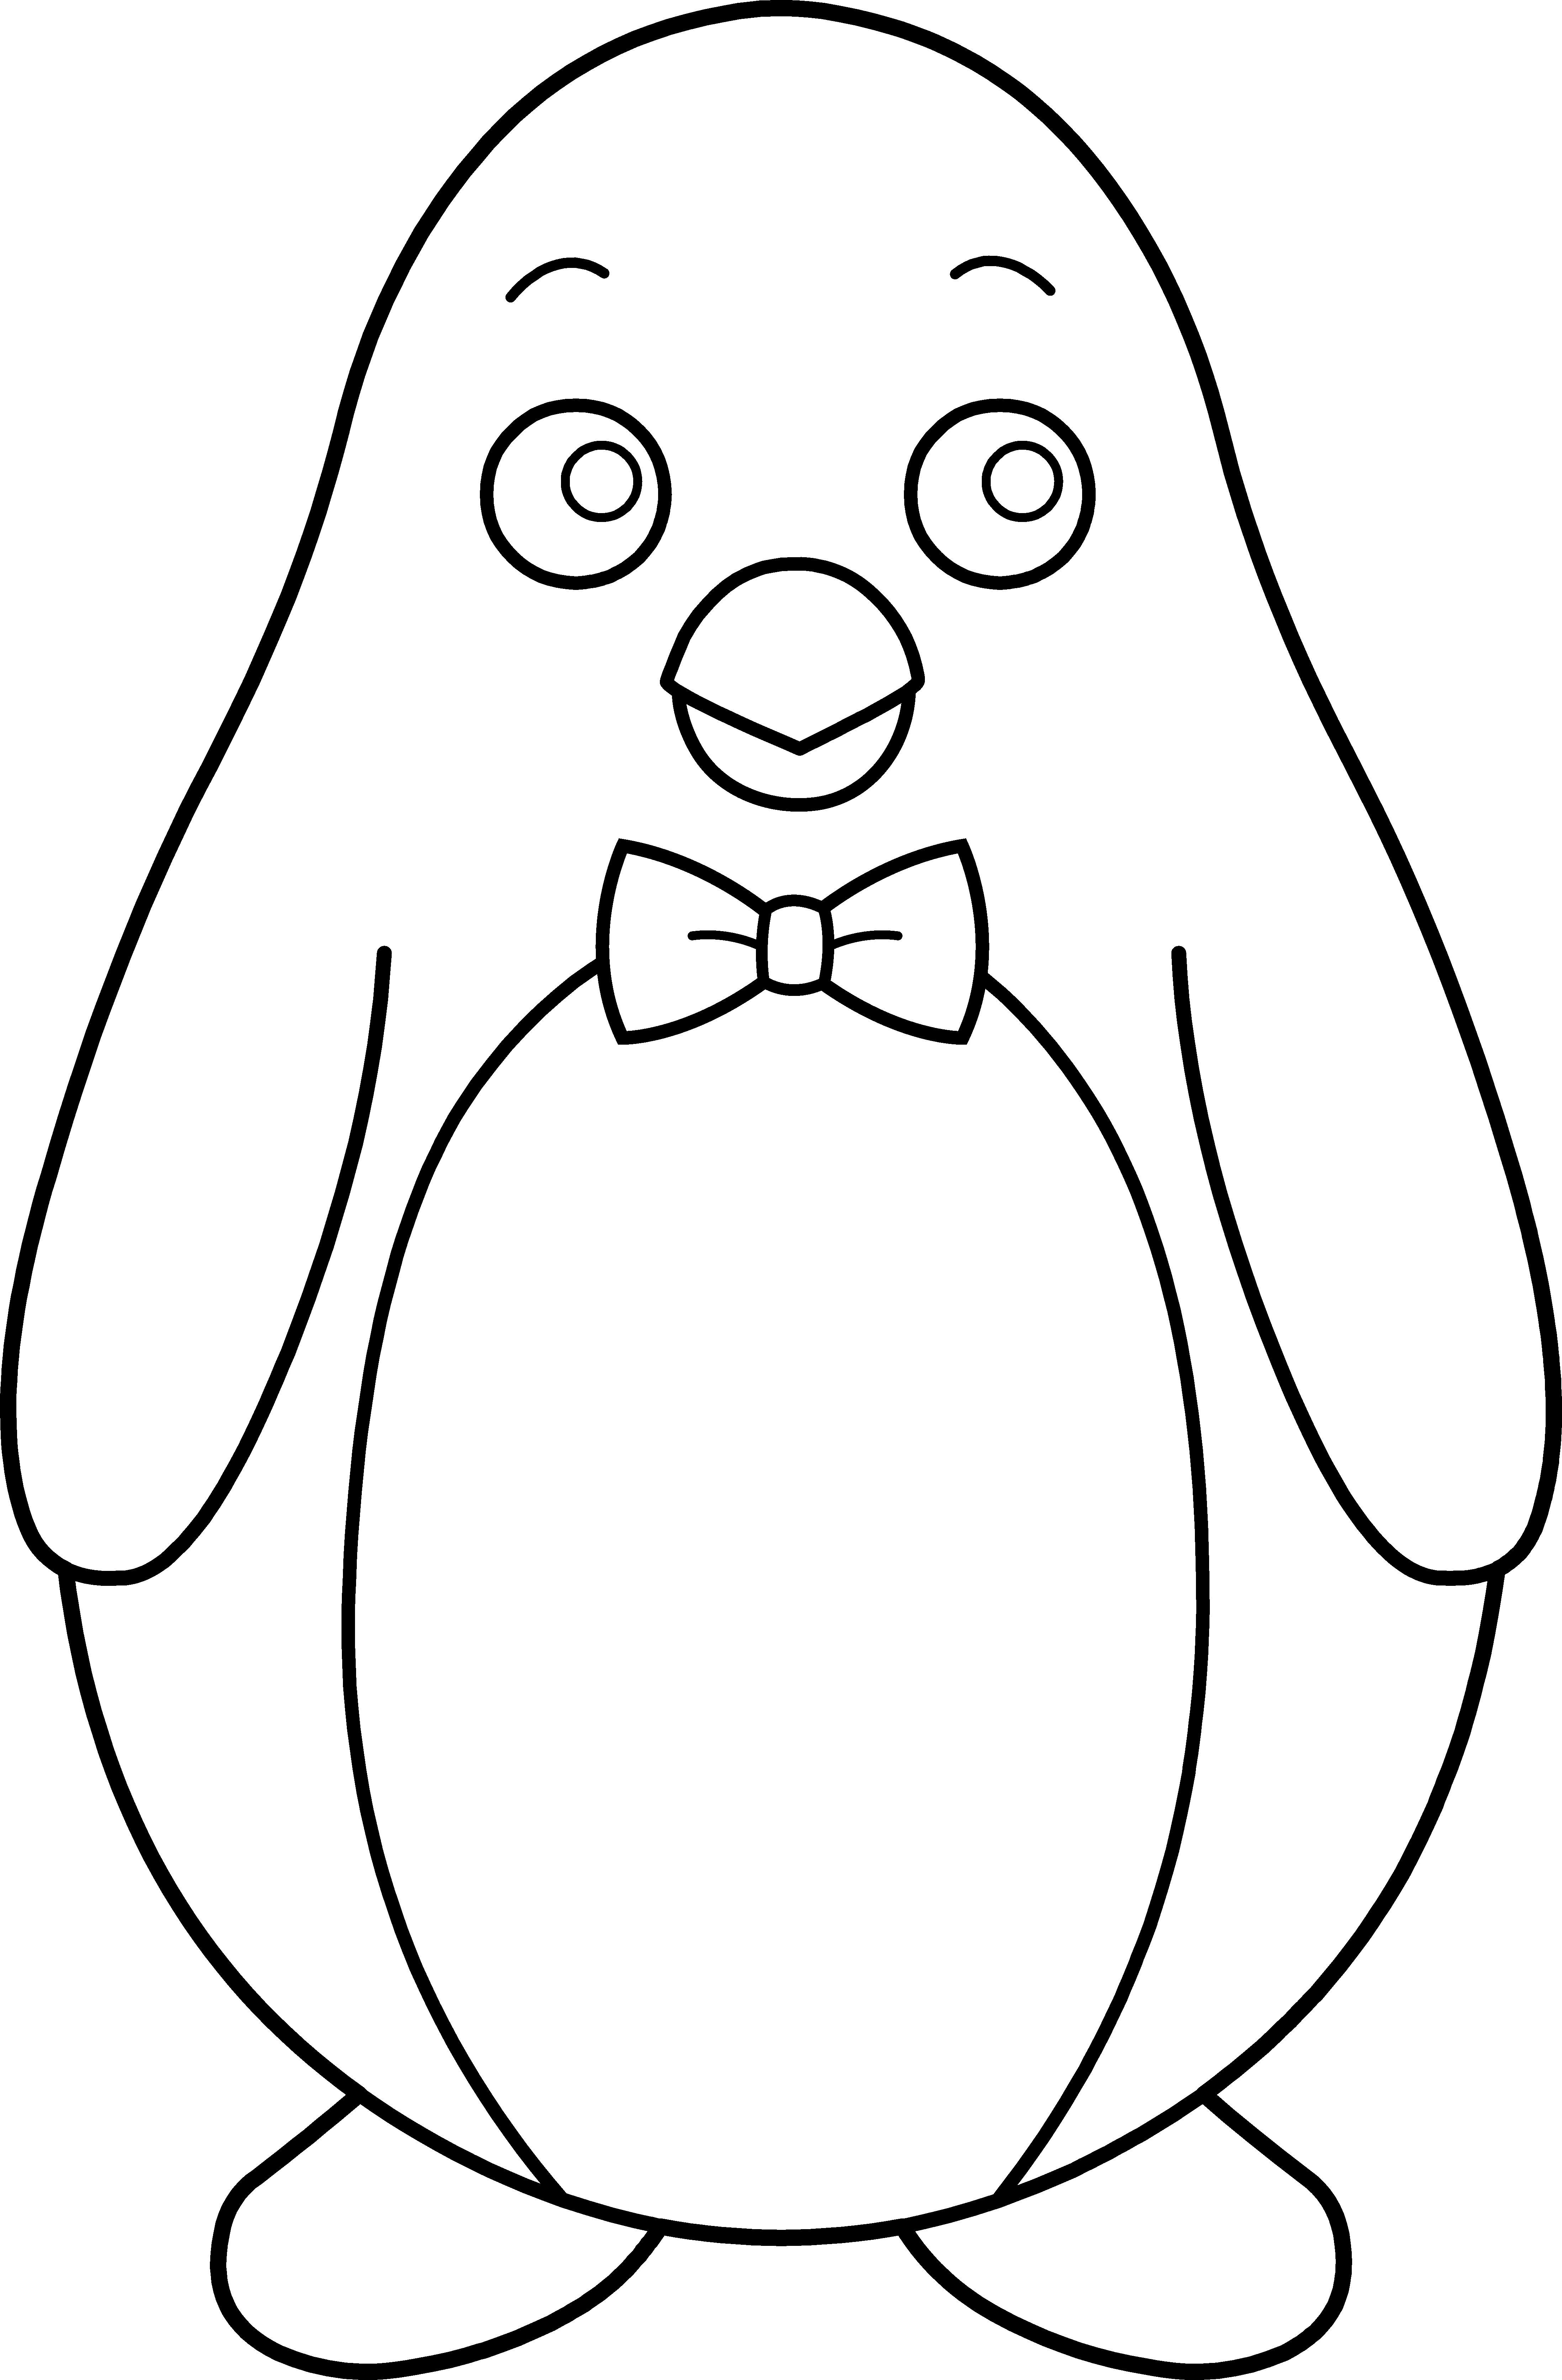 Penguin Clip Art Black And White - Gallery